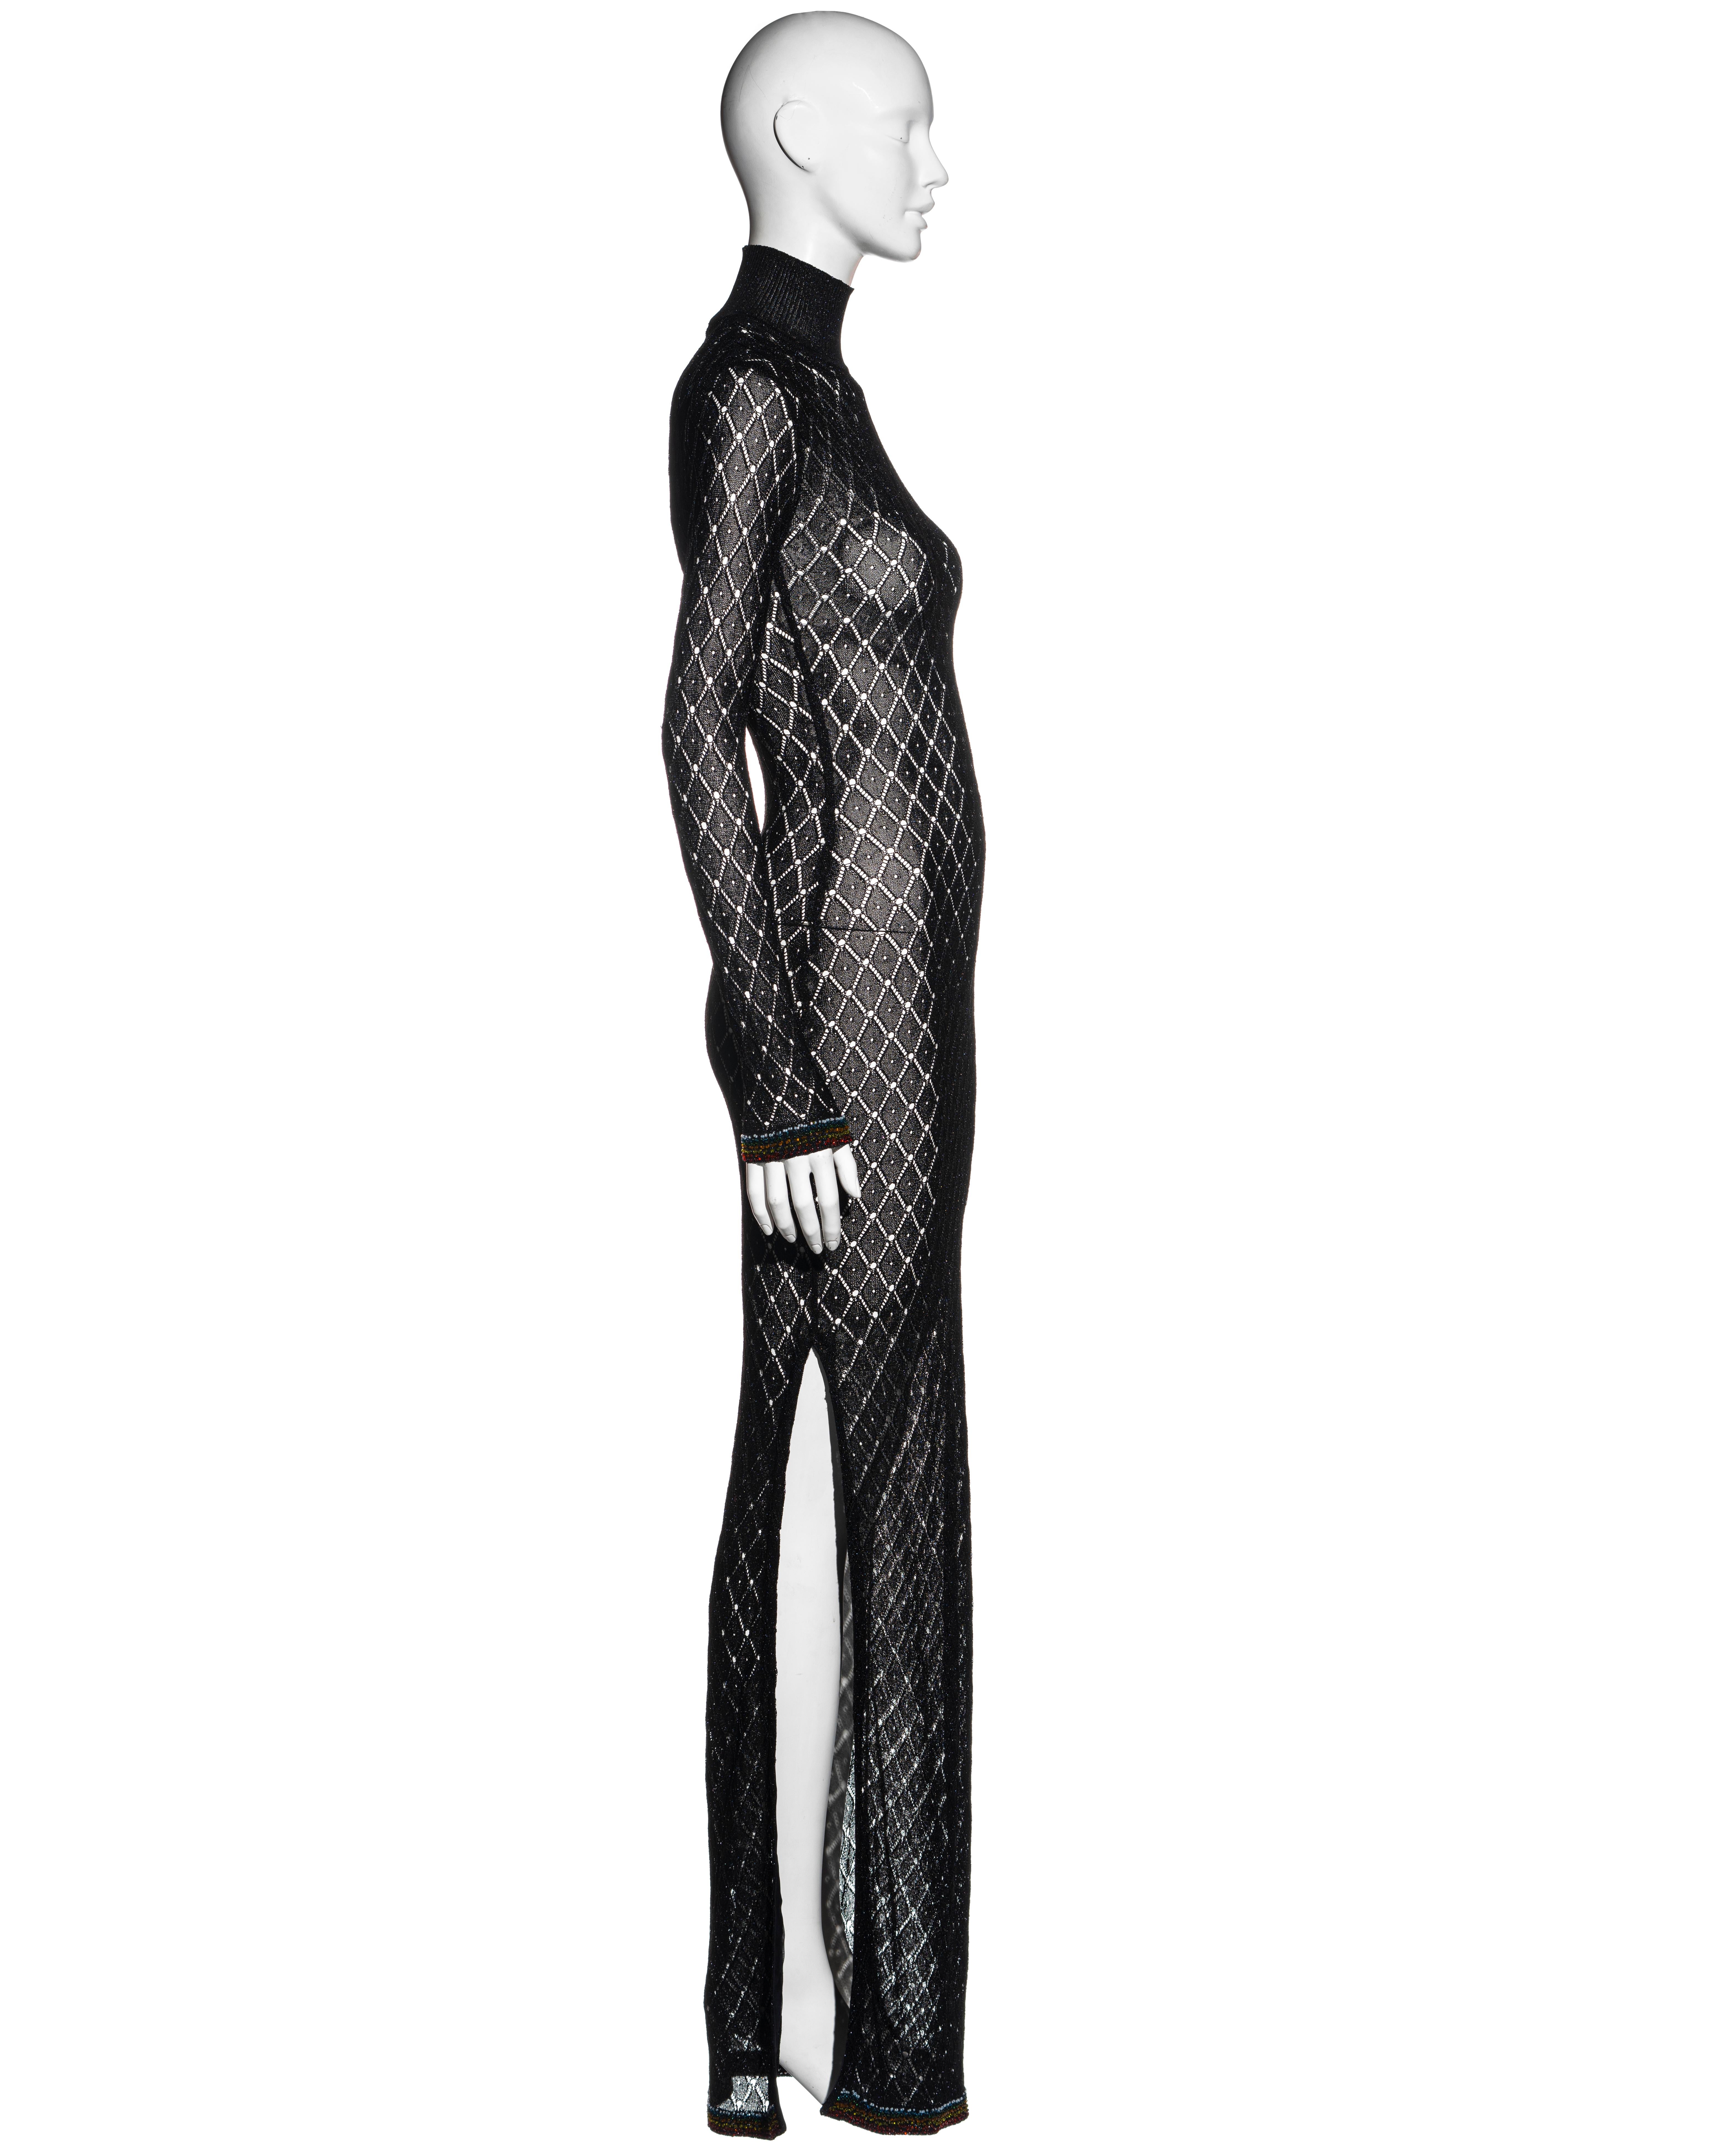 Christian Dior by John Galliano black open knit beaded maxi dress, fw 2001 1